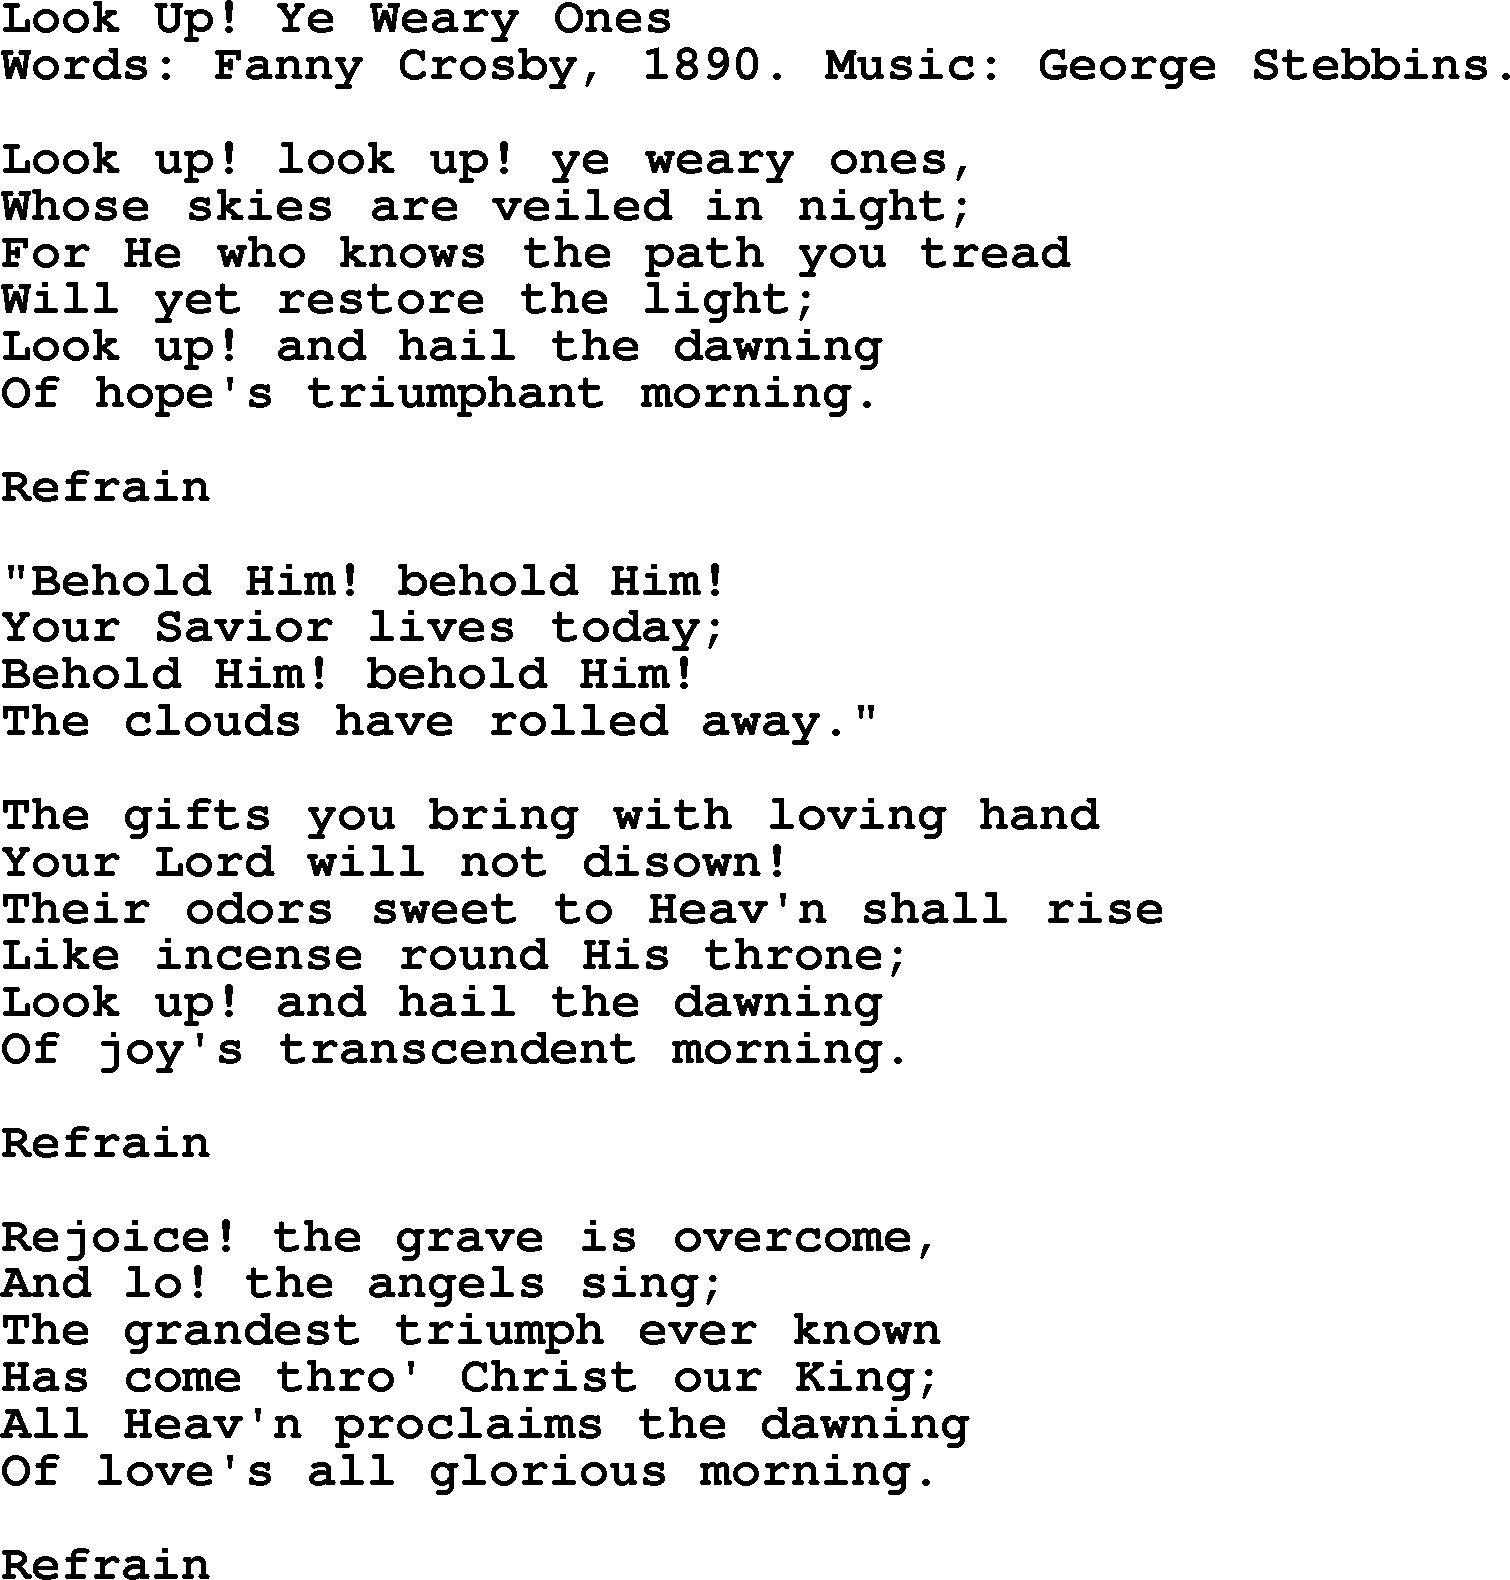 Fanny Crosby song: Look Up! Ye Weary Ones, lyrics